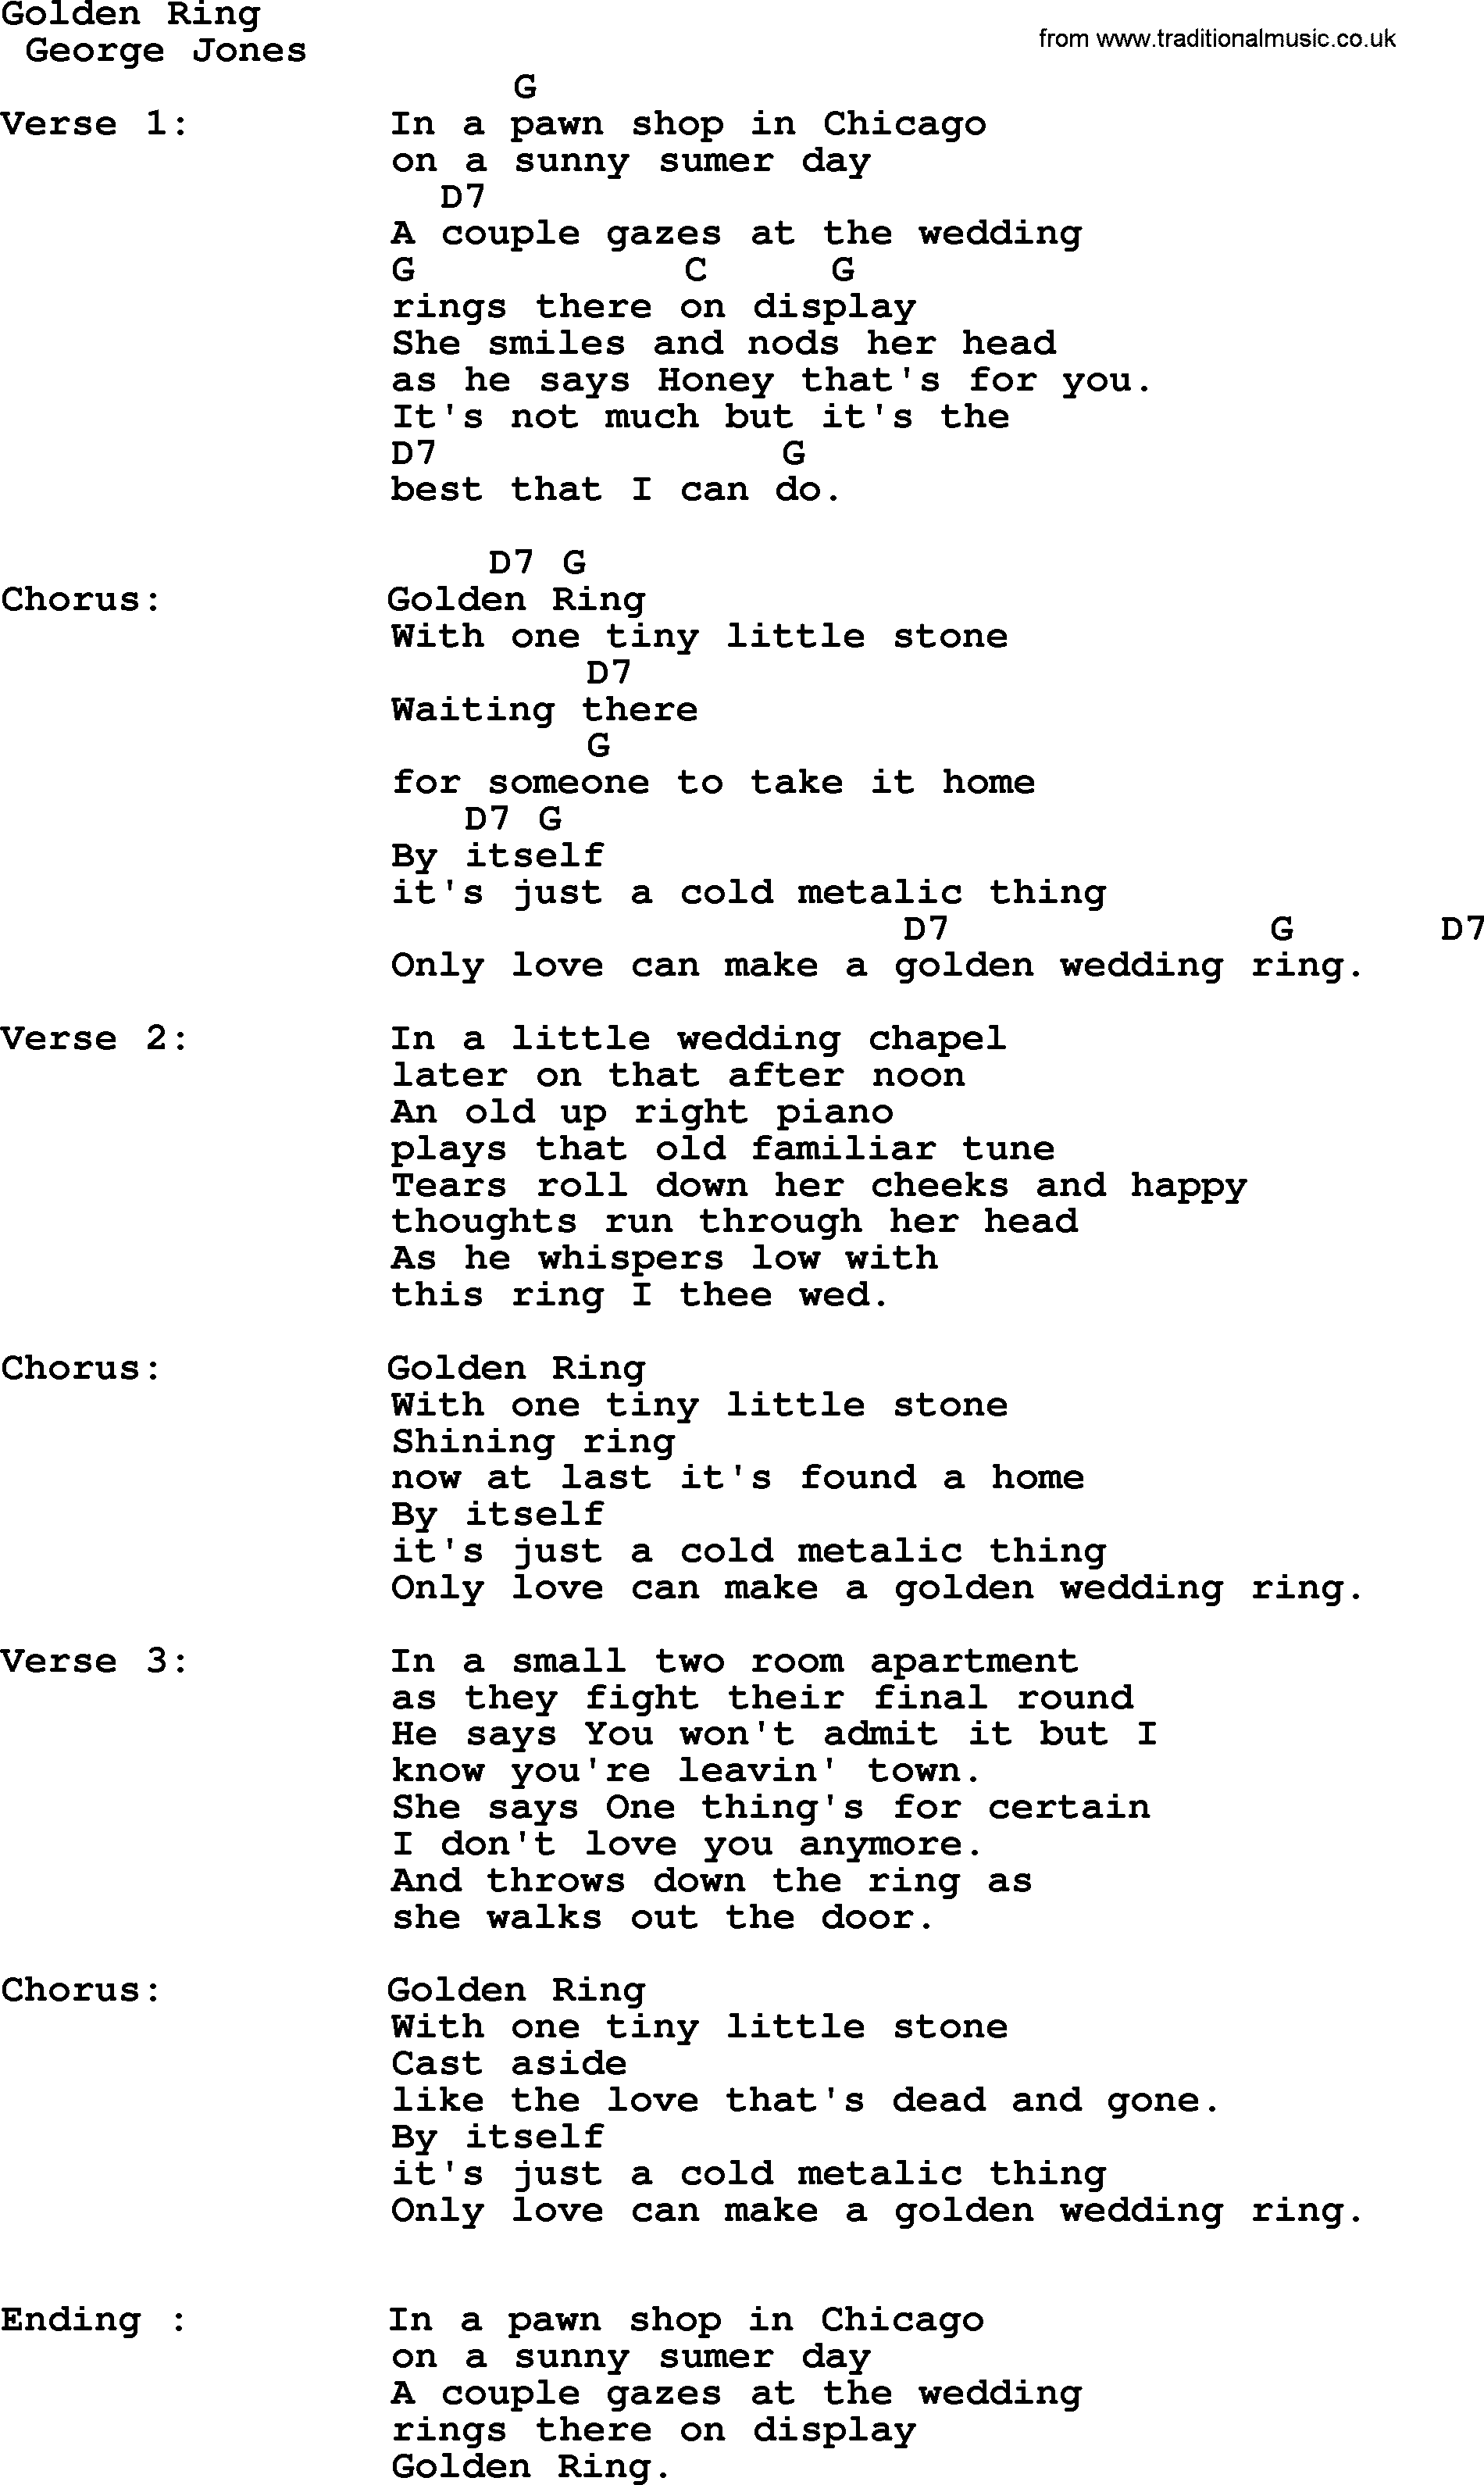 George Jones song: Golden Ring, lyrics and chords